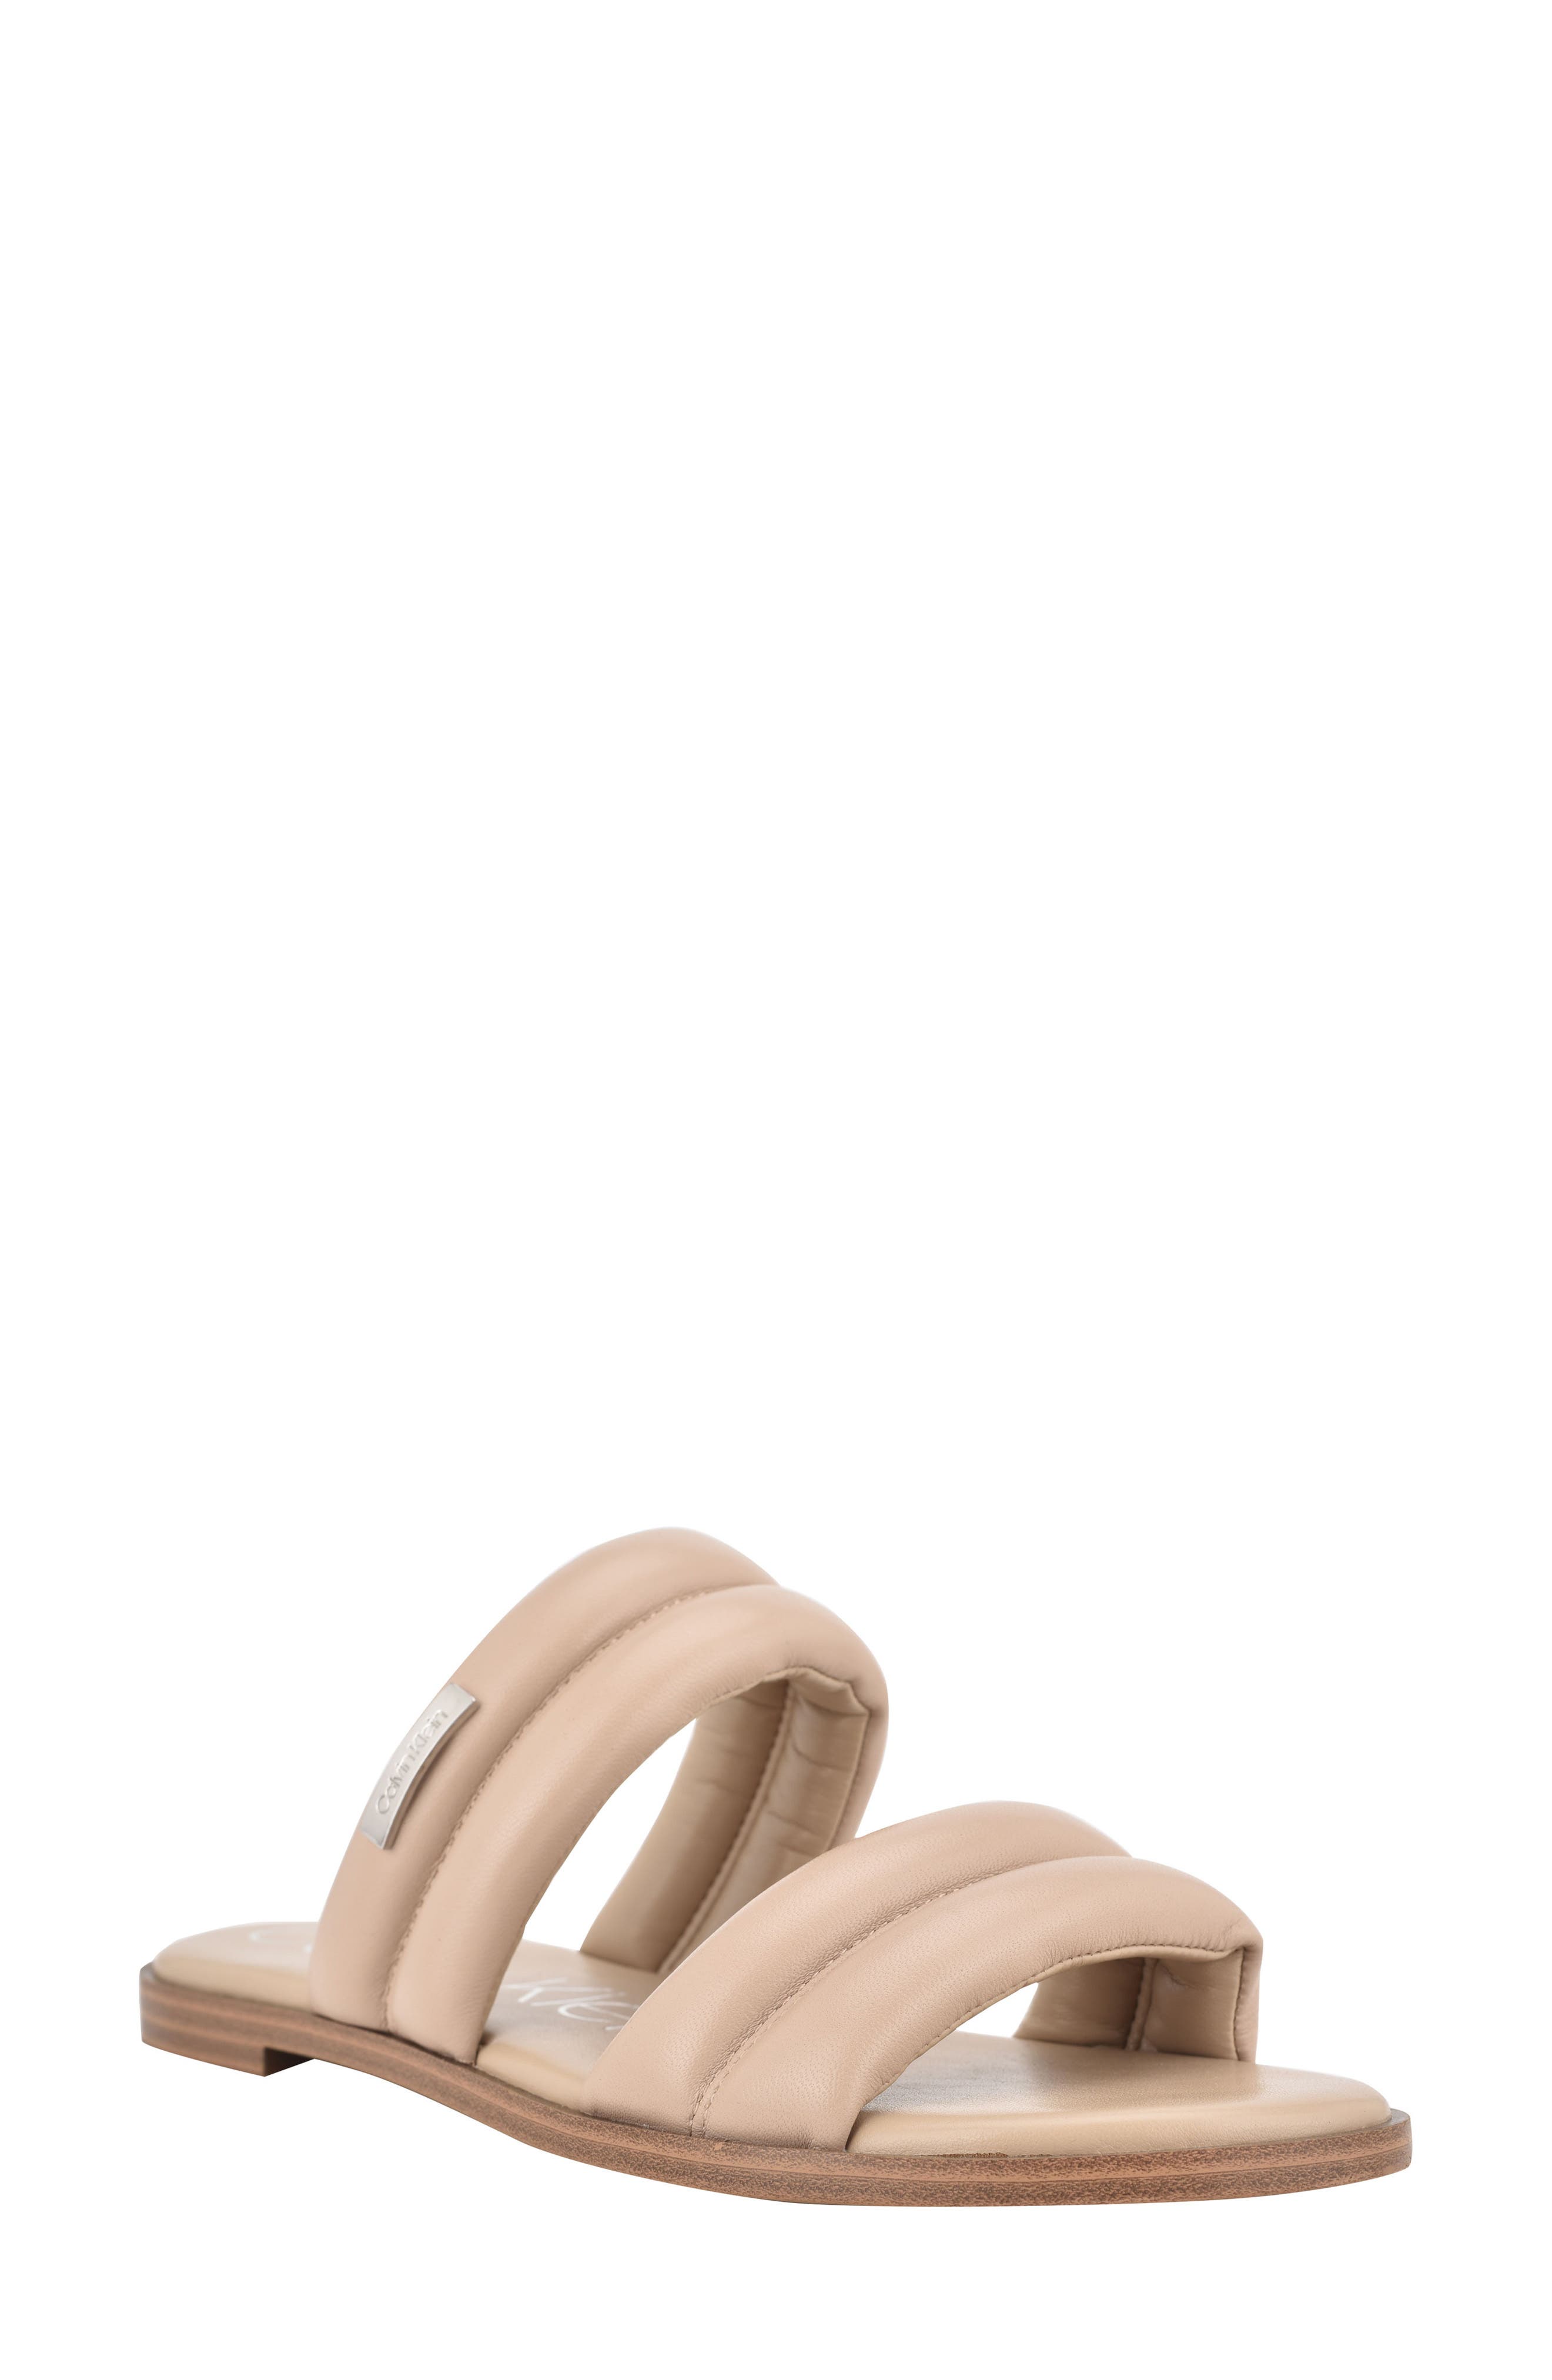 UPC 195182920830 product image for Women's Calvin Klein Koko Slide Sandal, Size 10 M - Beige | upcitemdb.com